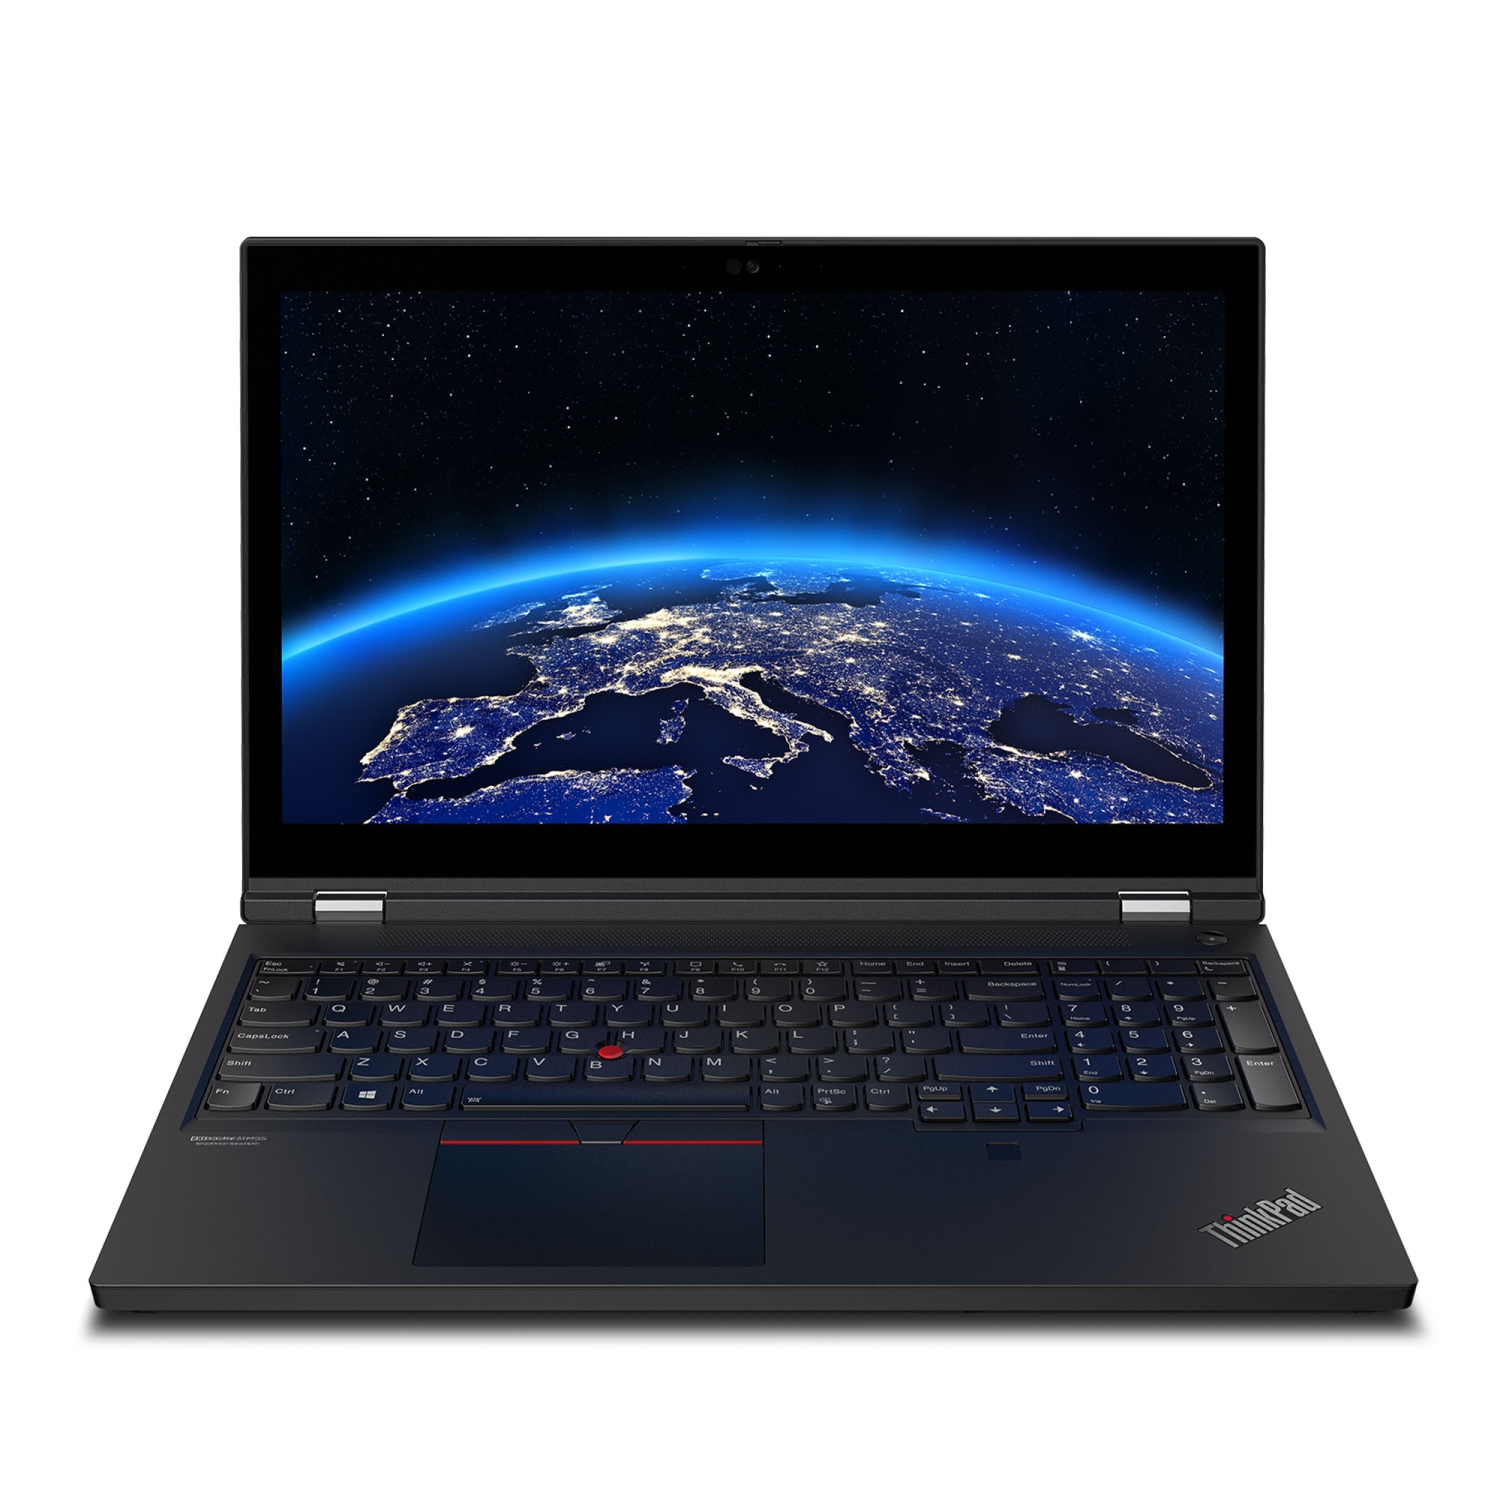 Lenovo ThinkPad T15g Intel Laptop, 15.6" FHD IPS Touch Narrow Bezel, i7-10750H, NVIDIA GeForce RTX 2080 Max-Q 8GB GDDR6, 16GB